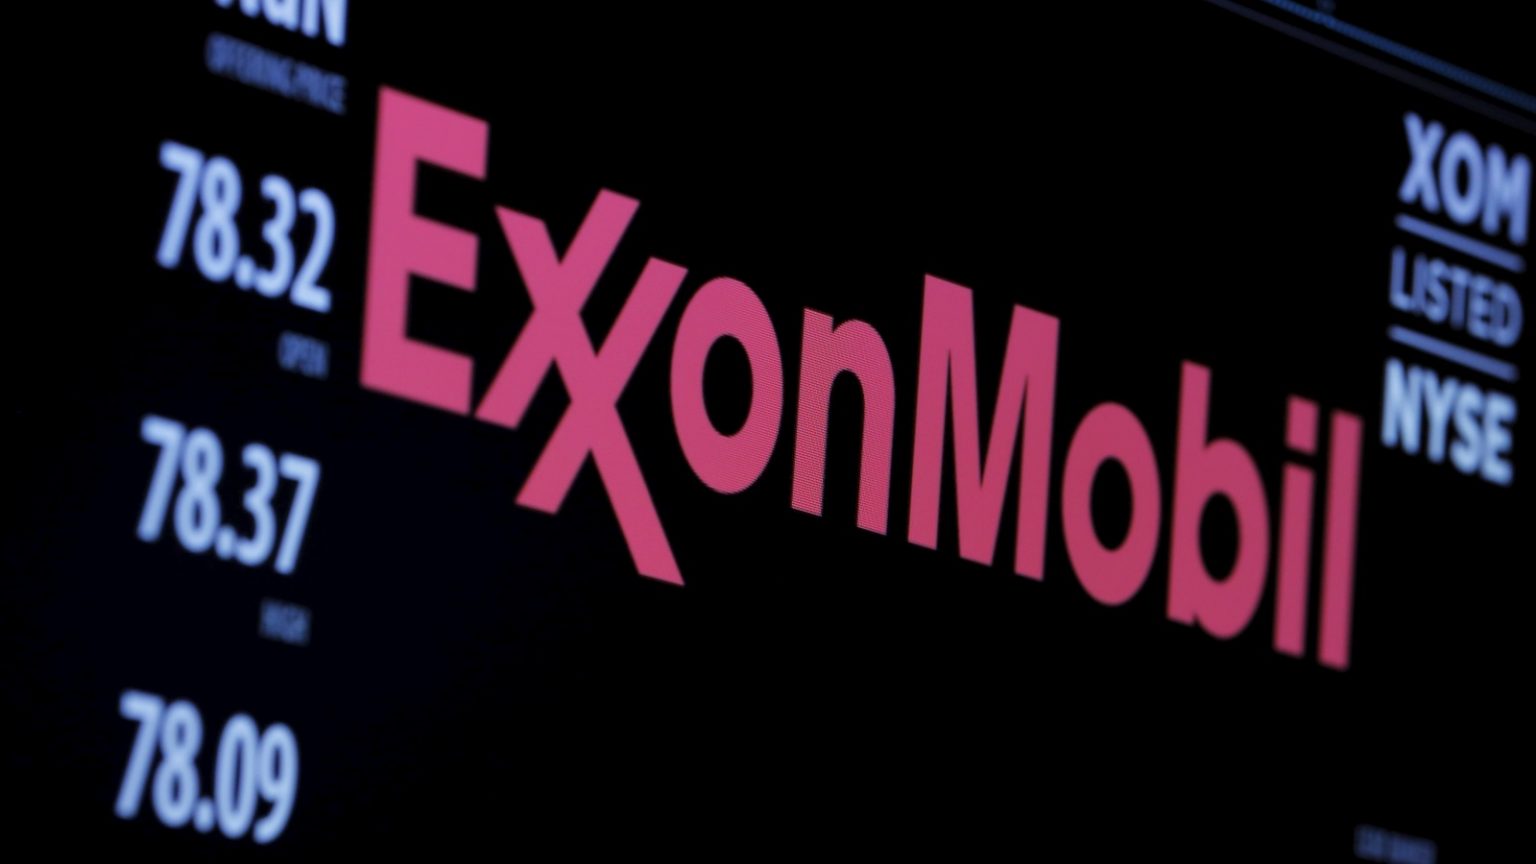 Iraq Buying ExxonMobil’s Stake